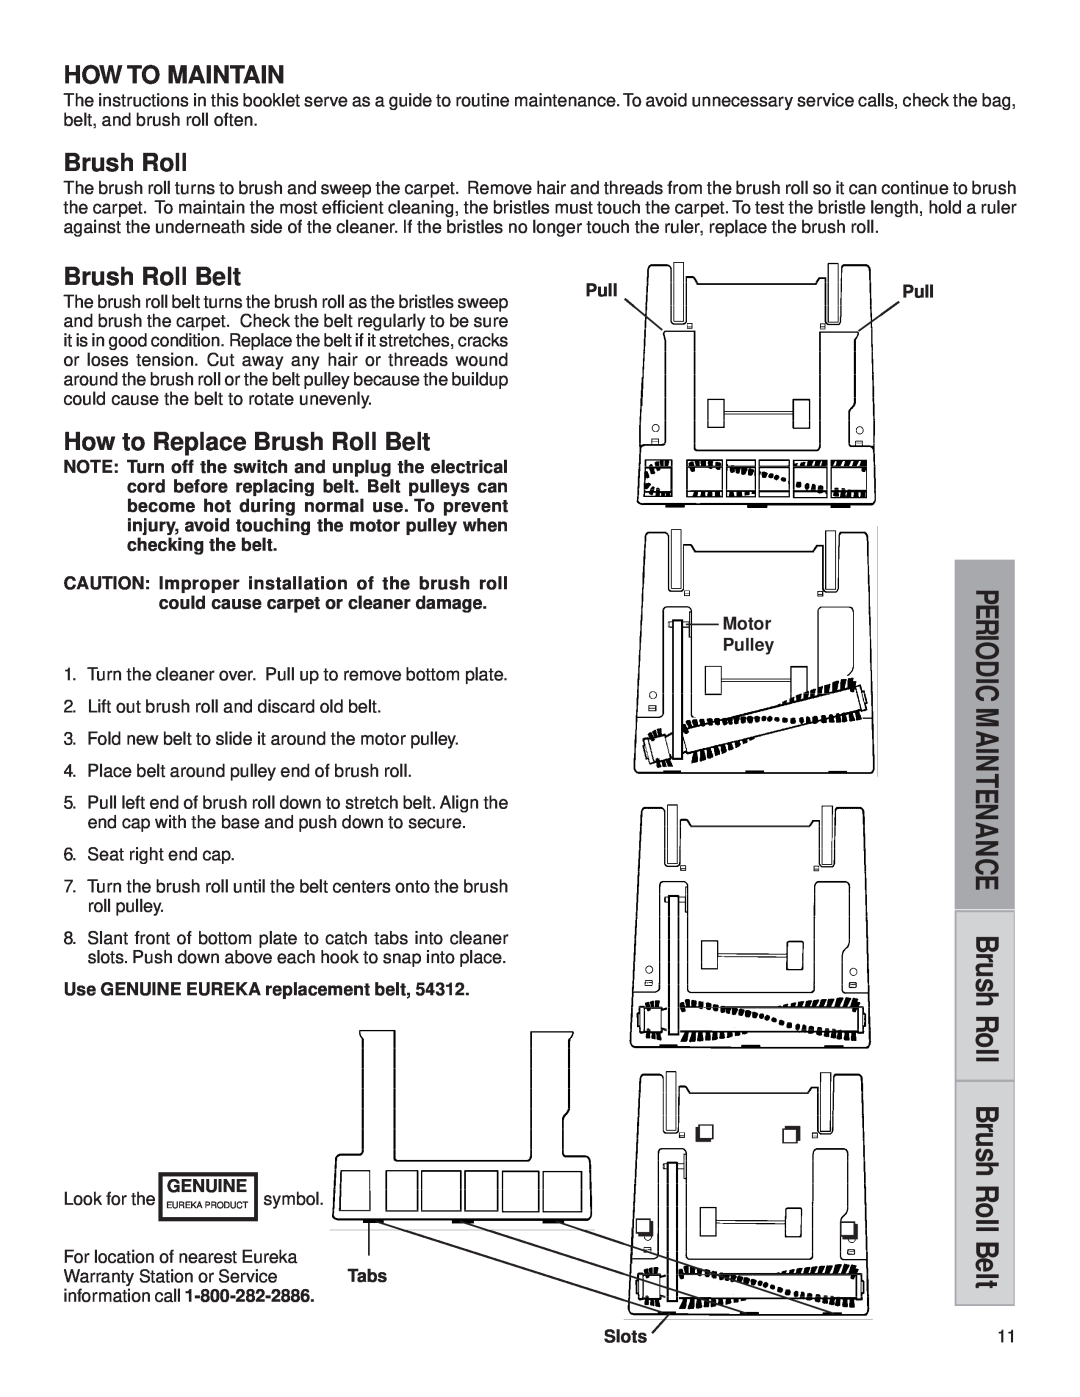 Eureka 7800 BrushRoll, How To Maintain, How to Replace Brush Roll Belt, Periodic Maintenance, Motor Pulley, Slots 